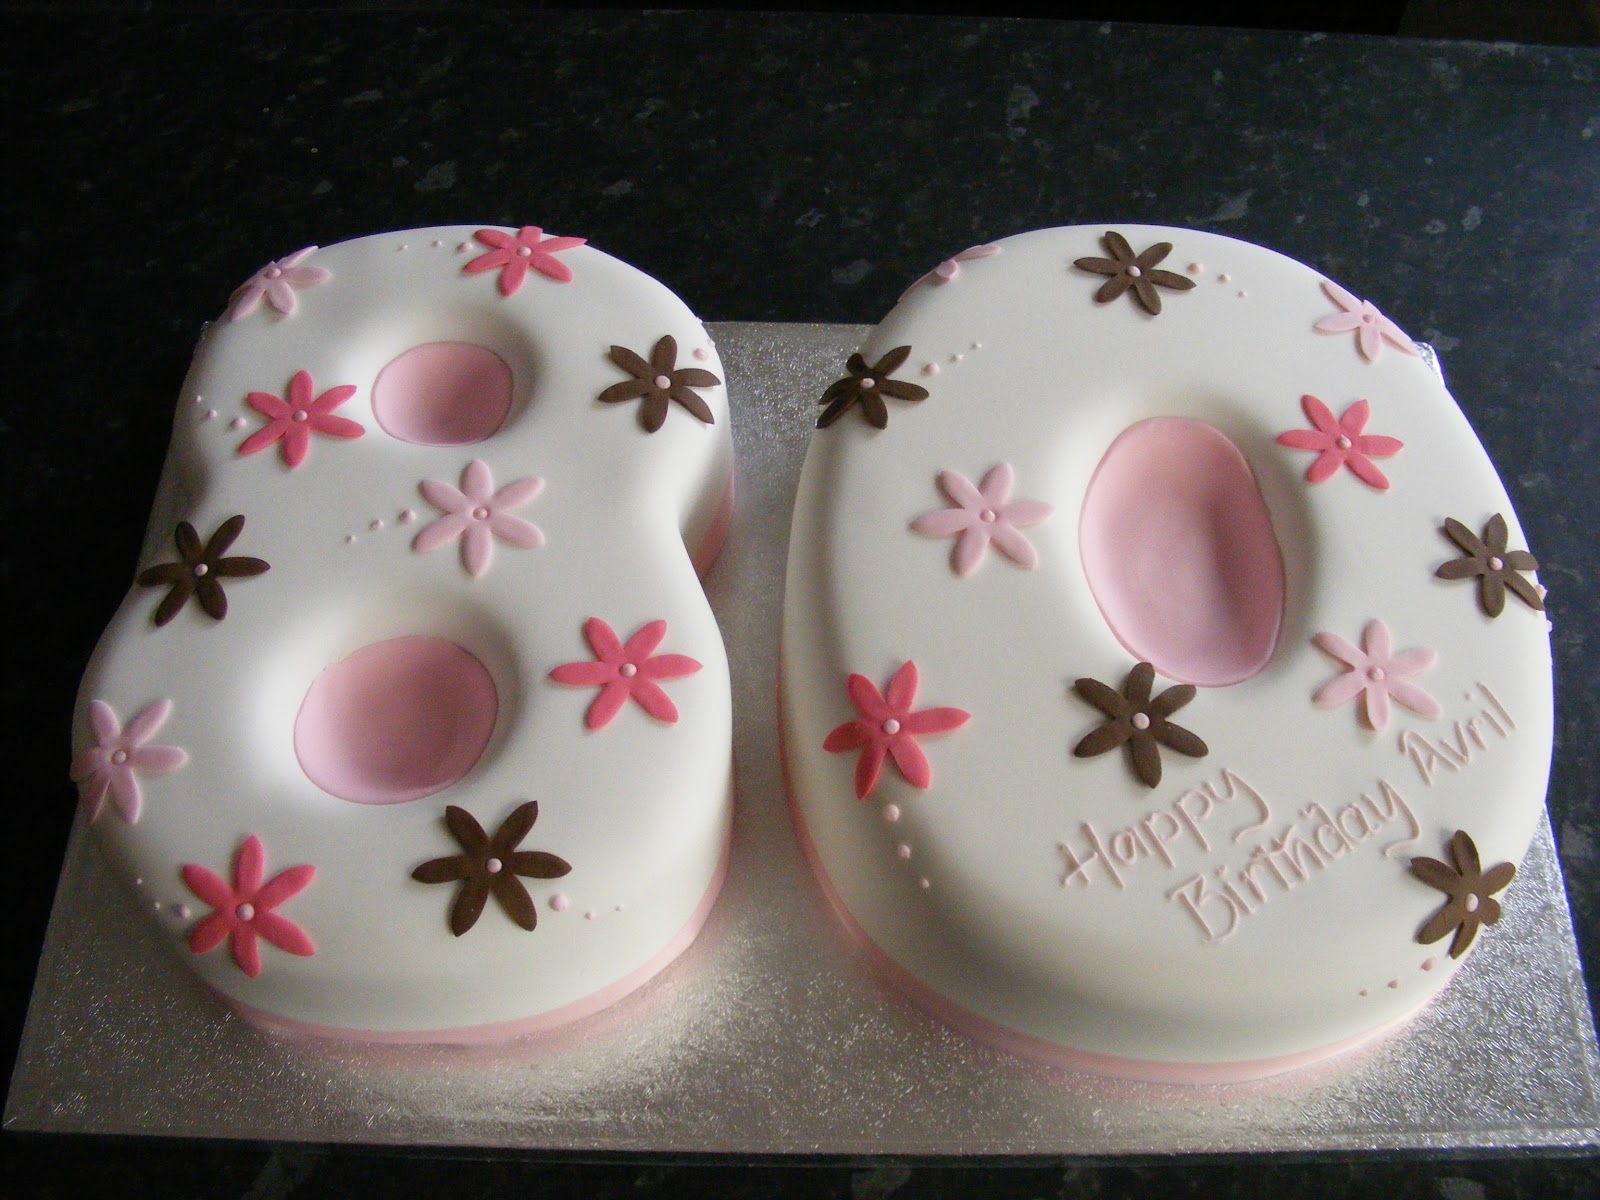  Cakes  By Karen 80th  Birthday  Cake  